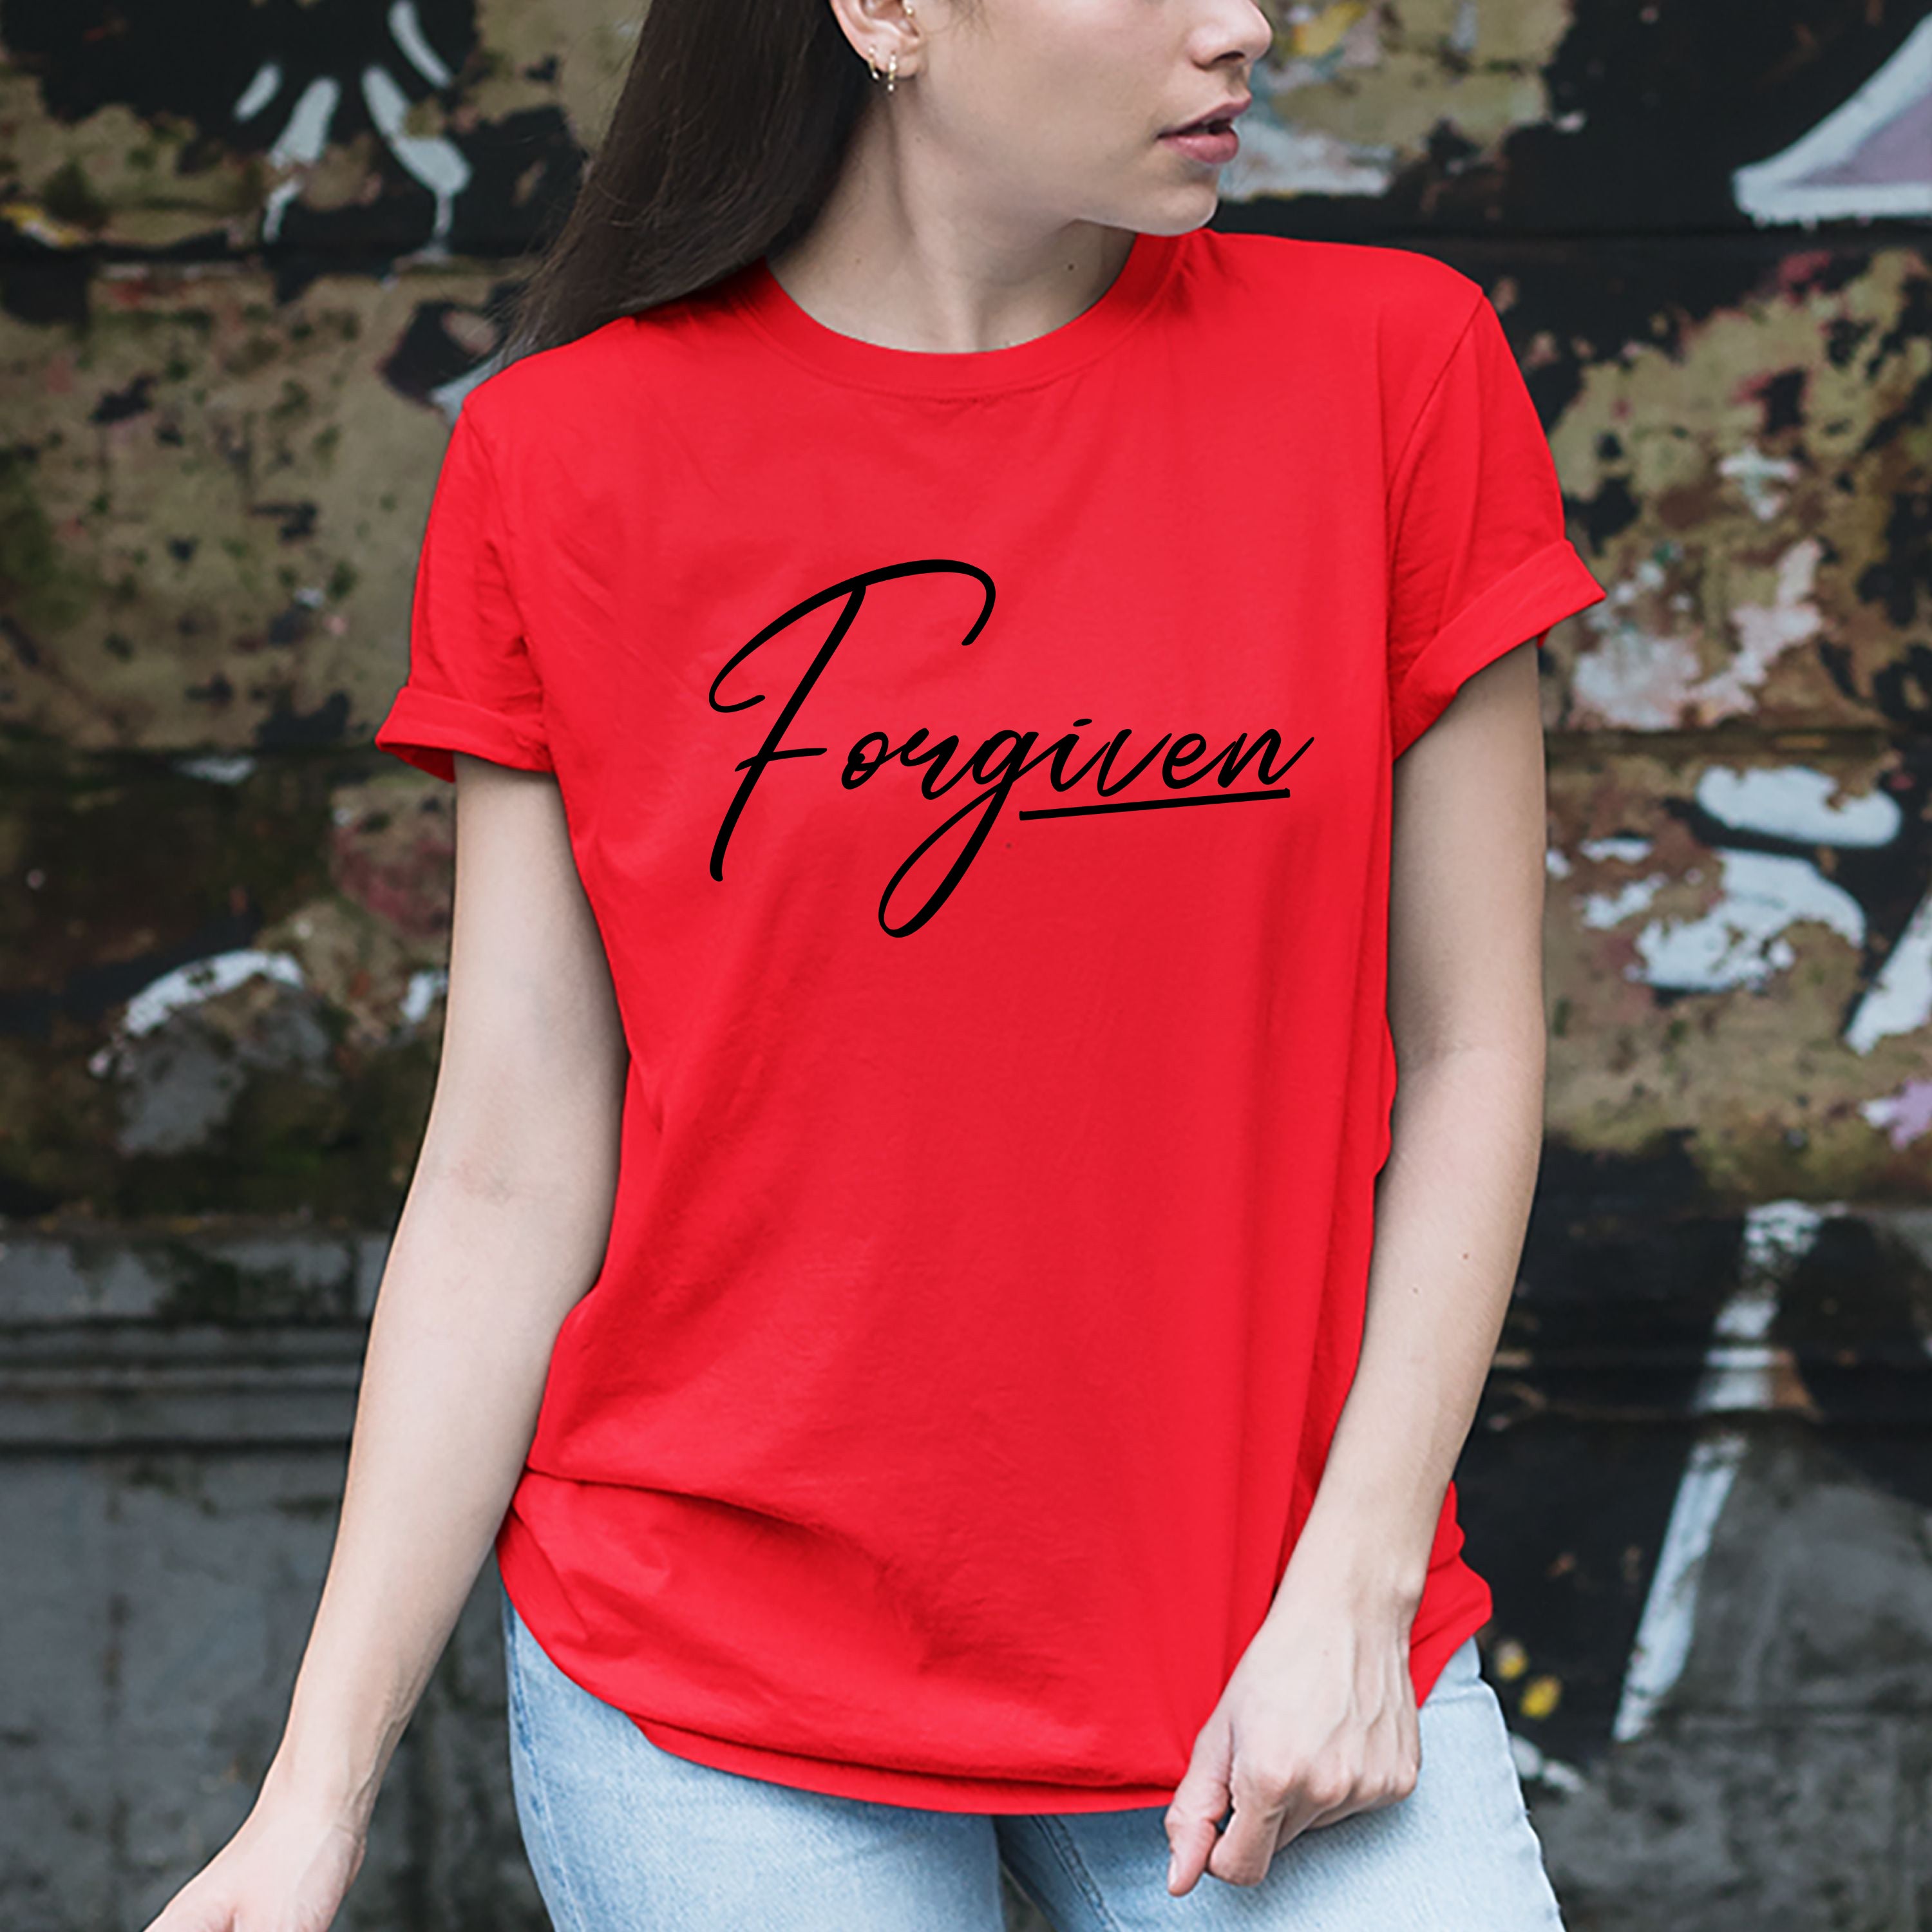 "Forgiven", T-Shirt.